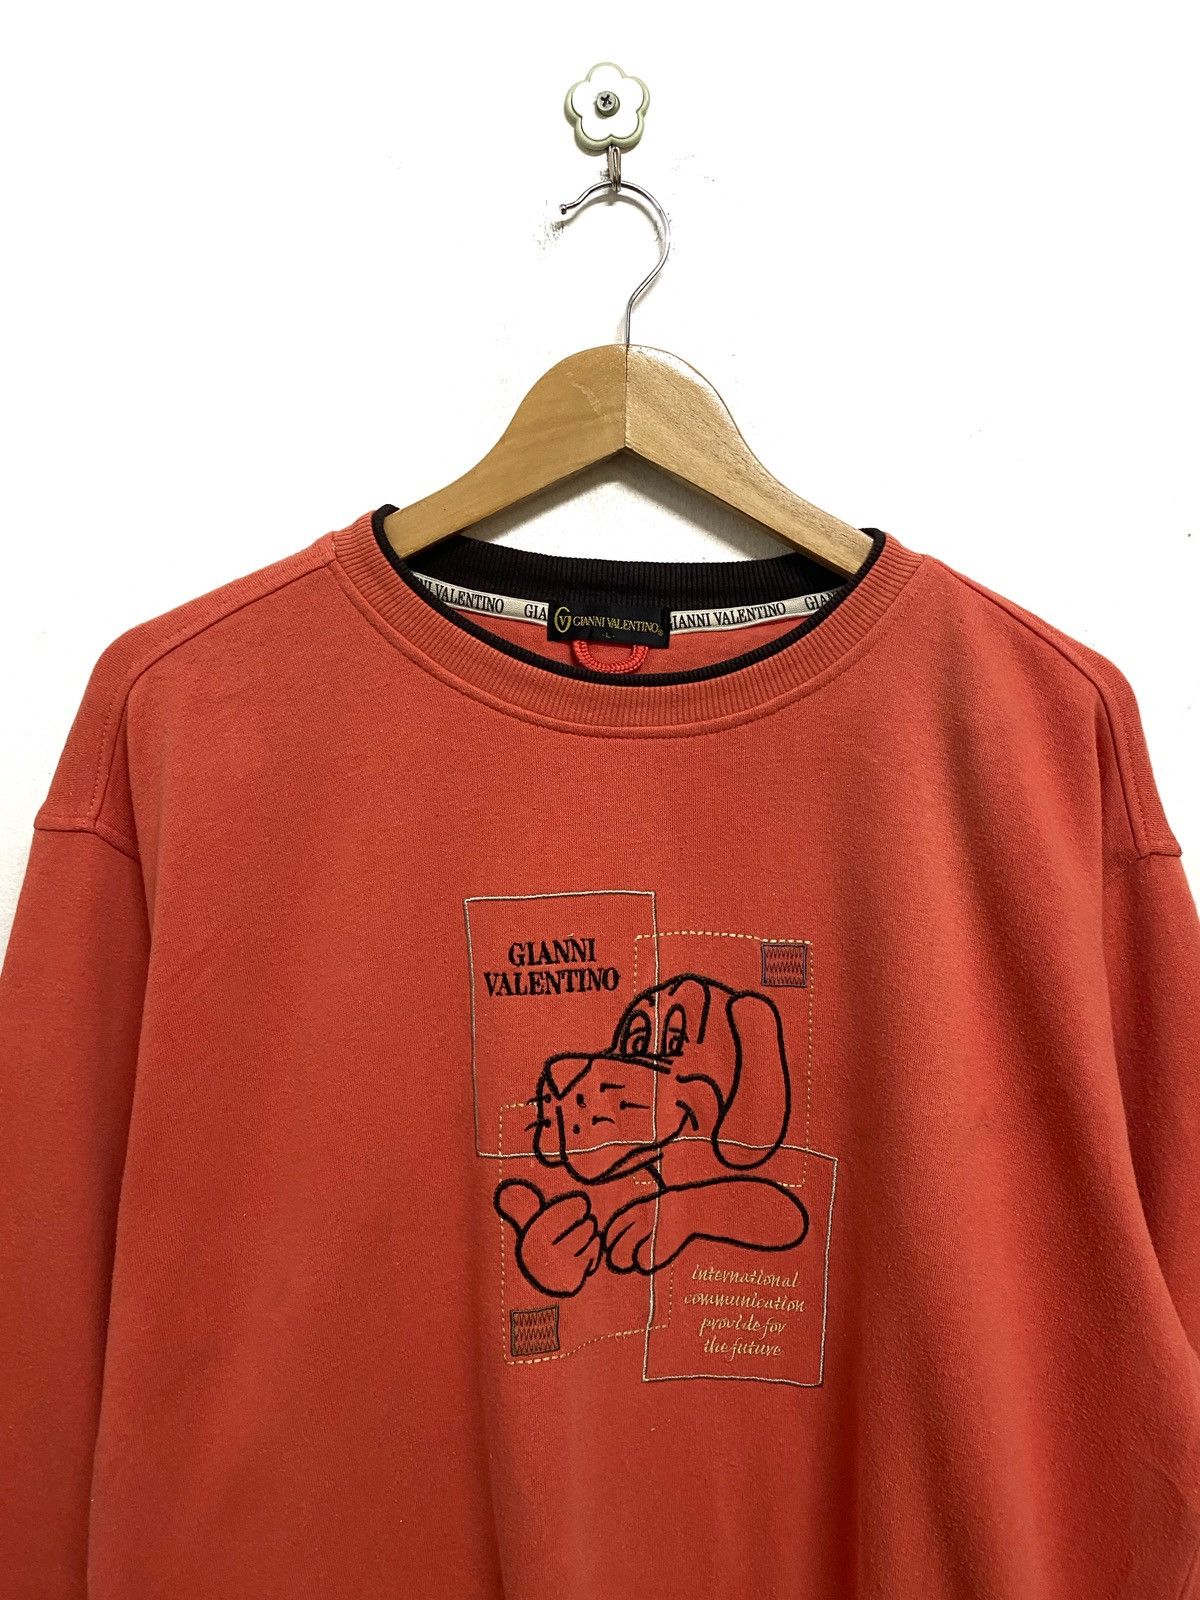 Vintage Gianni Valentino Sweatshirt - 2